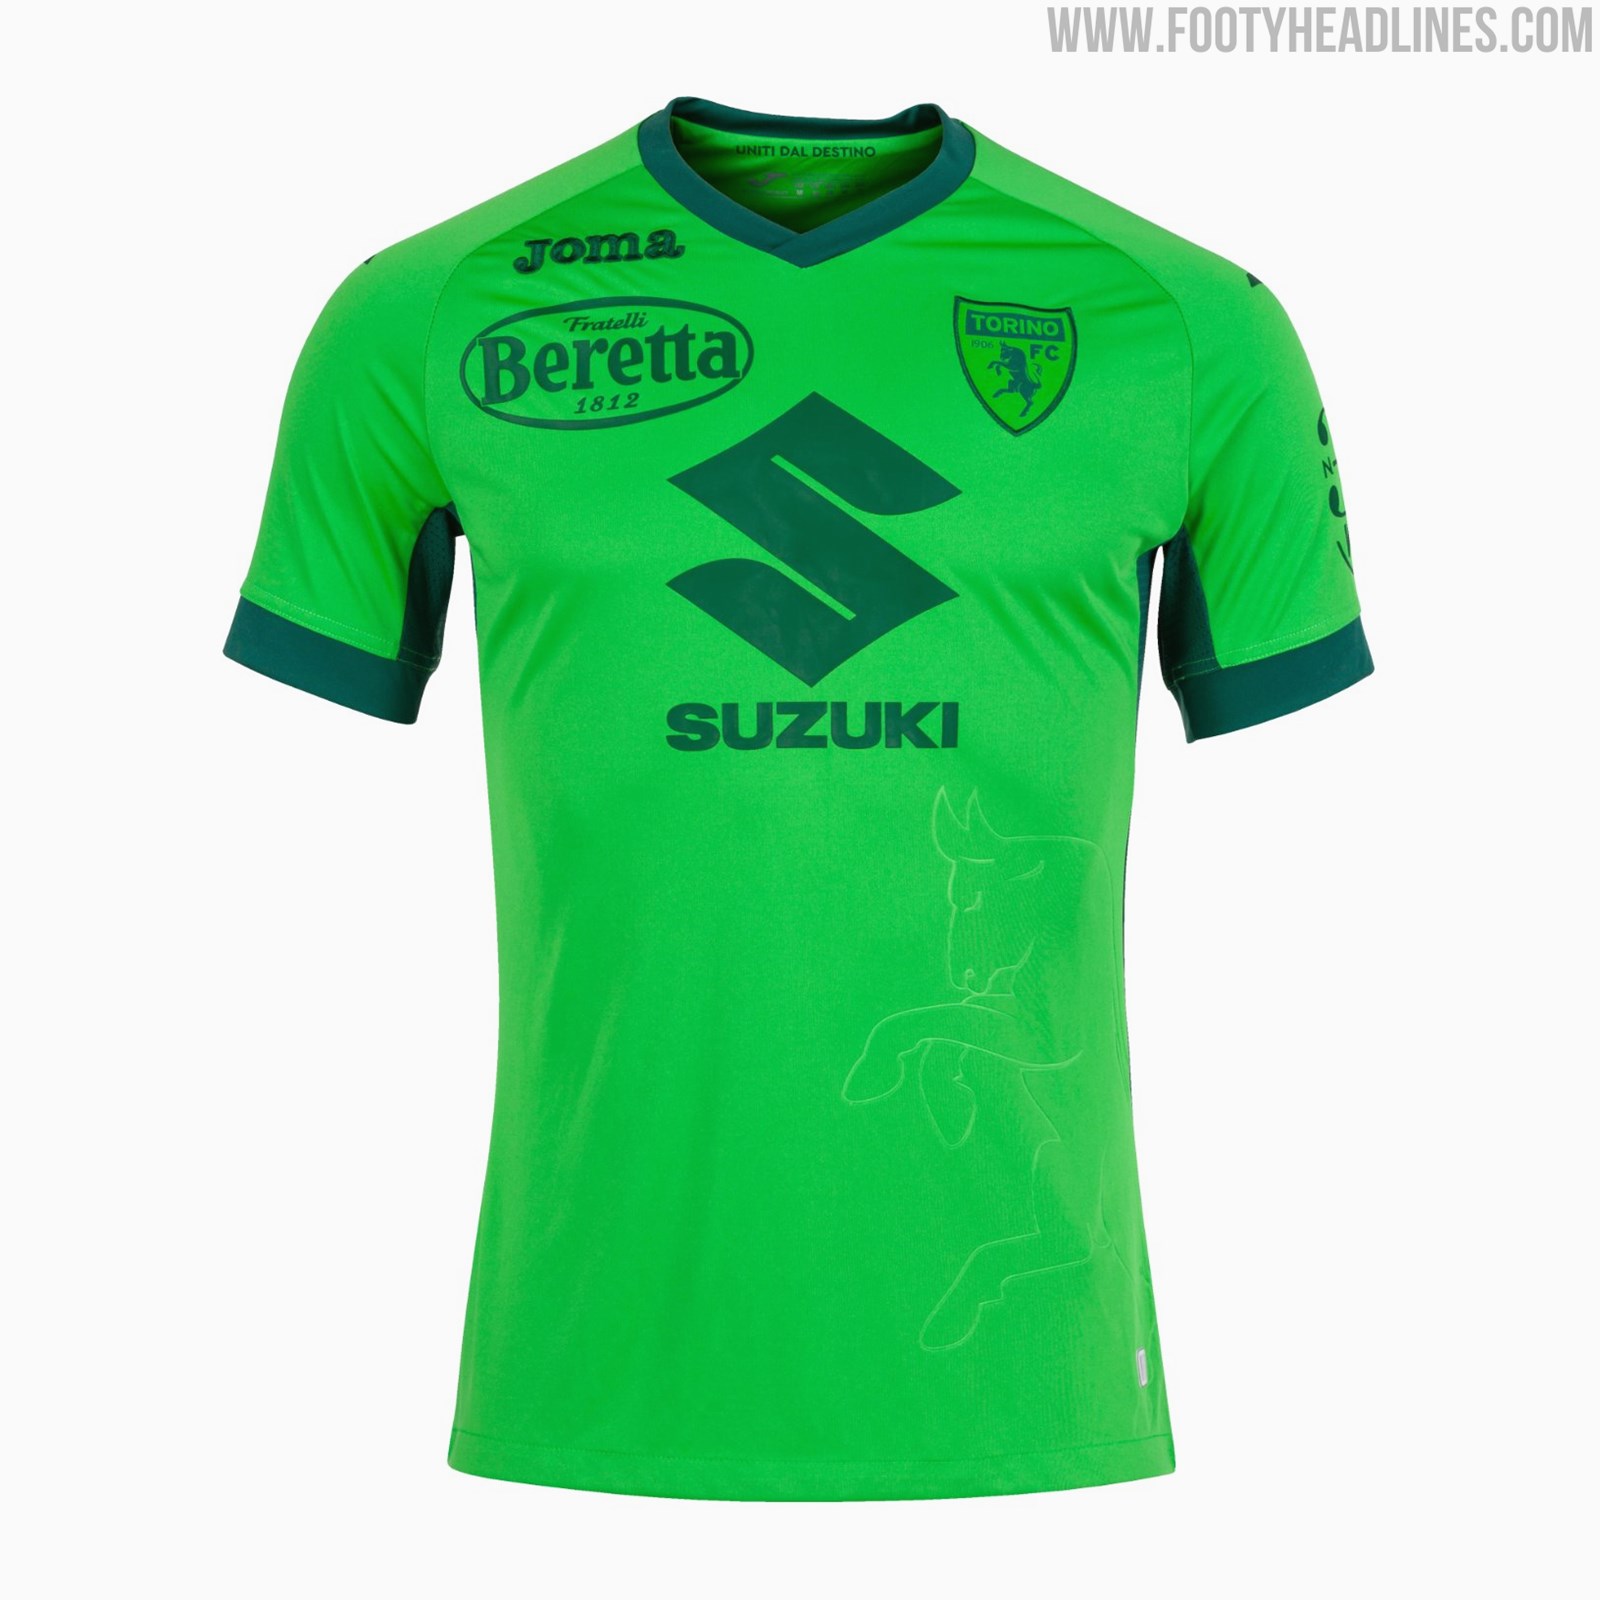 Torino FC 22-23 Third Kit Released - Footy Headlines